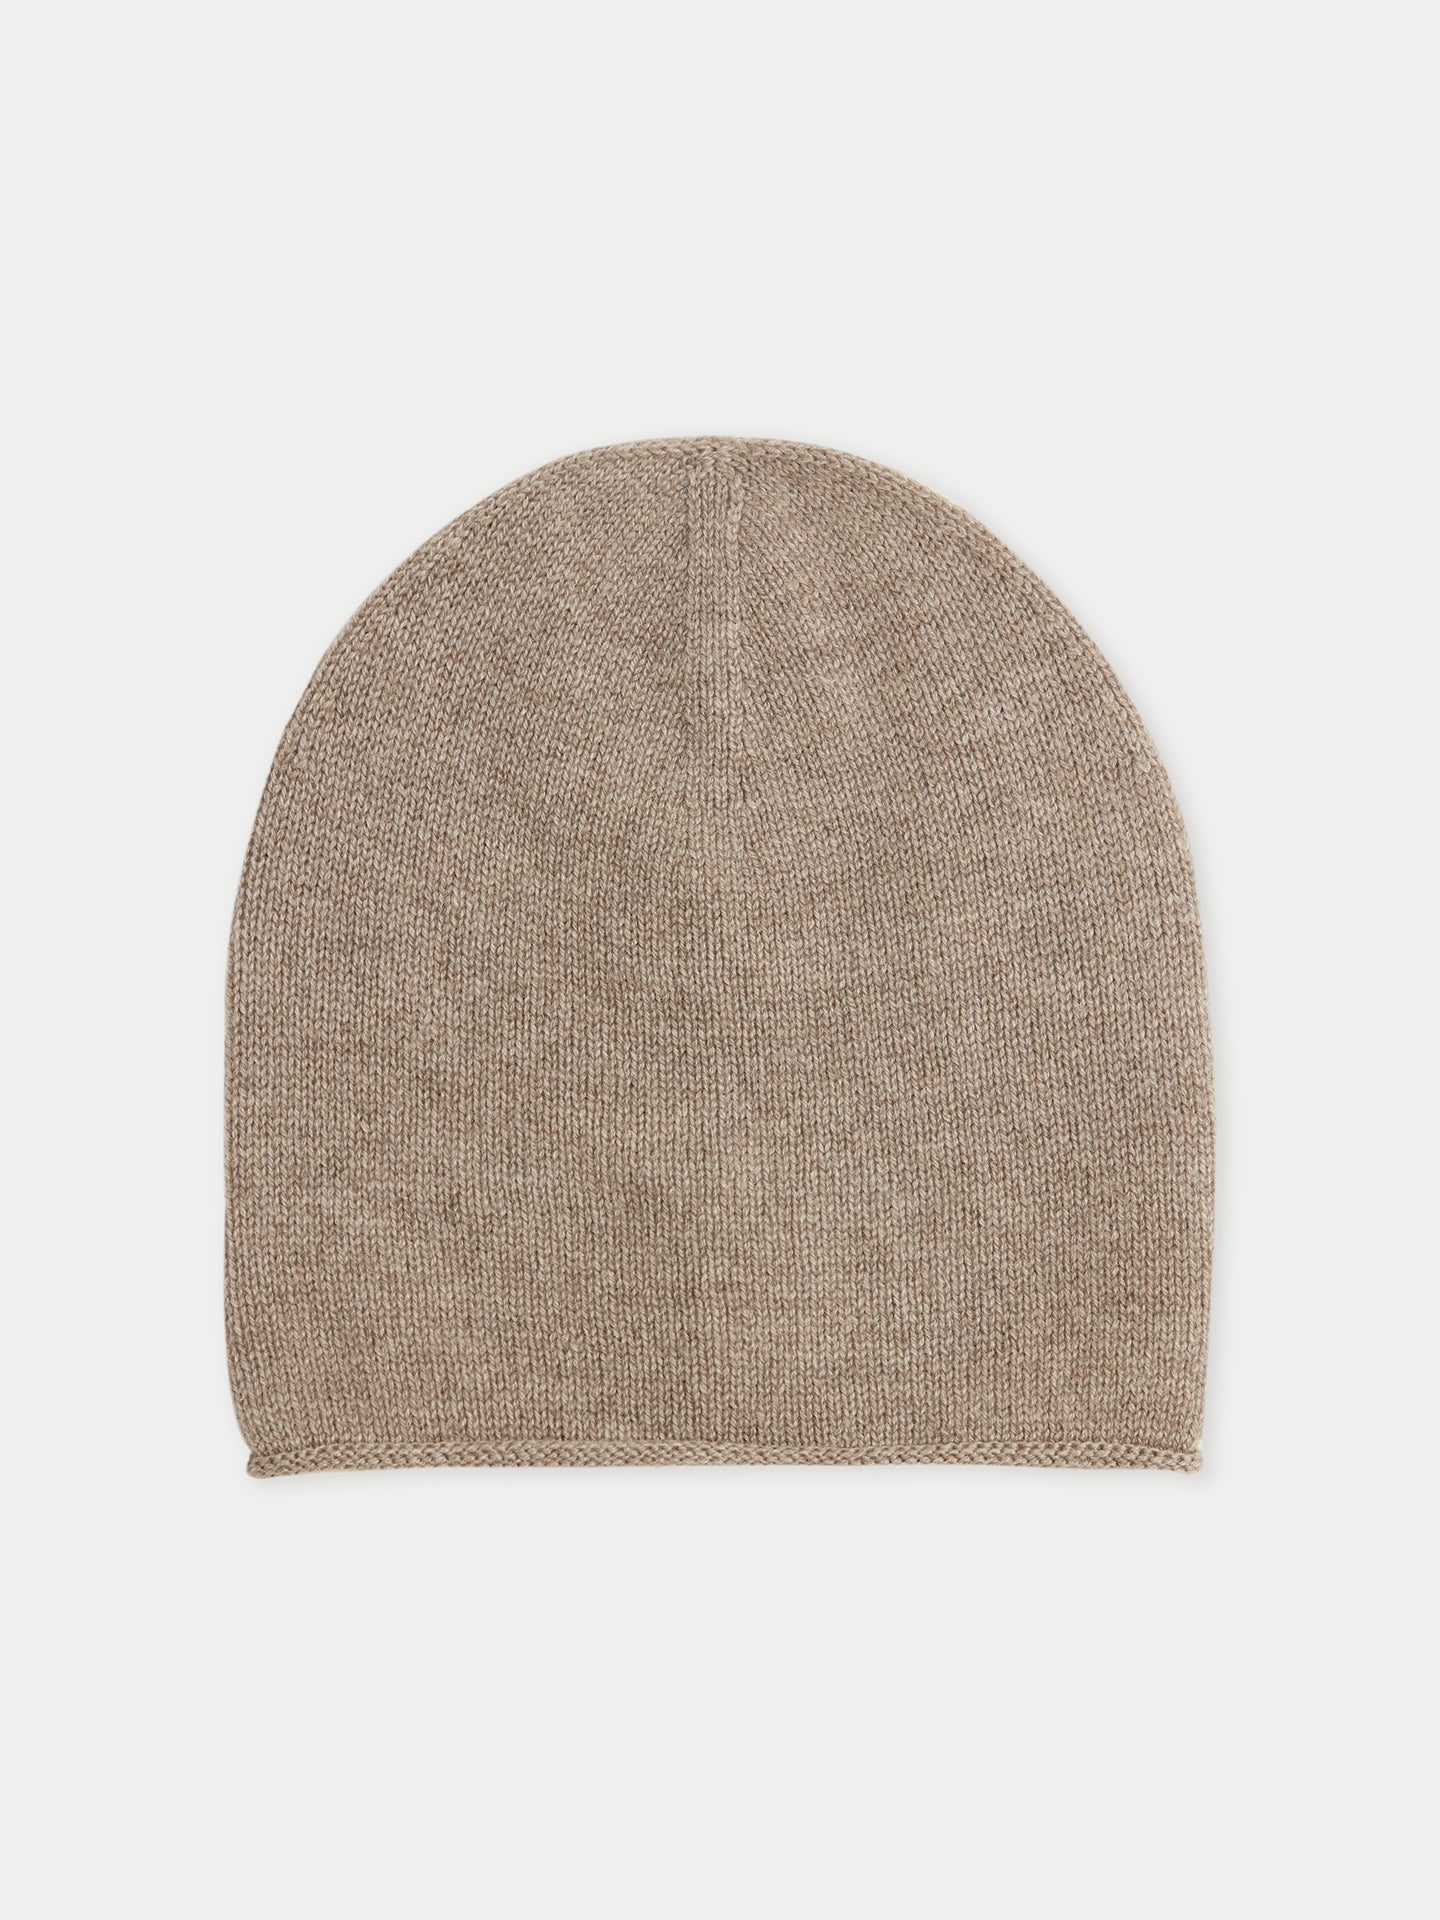 Women's Cashmere €99 Hat & Sweater Set Taupe - Gobi Cashmere